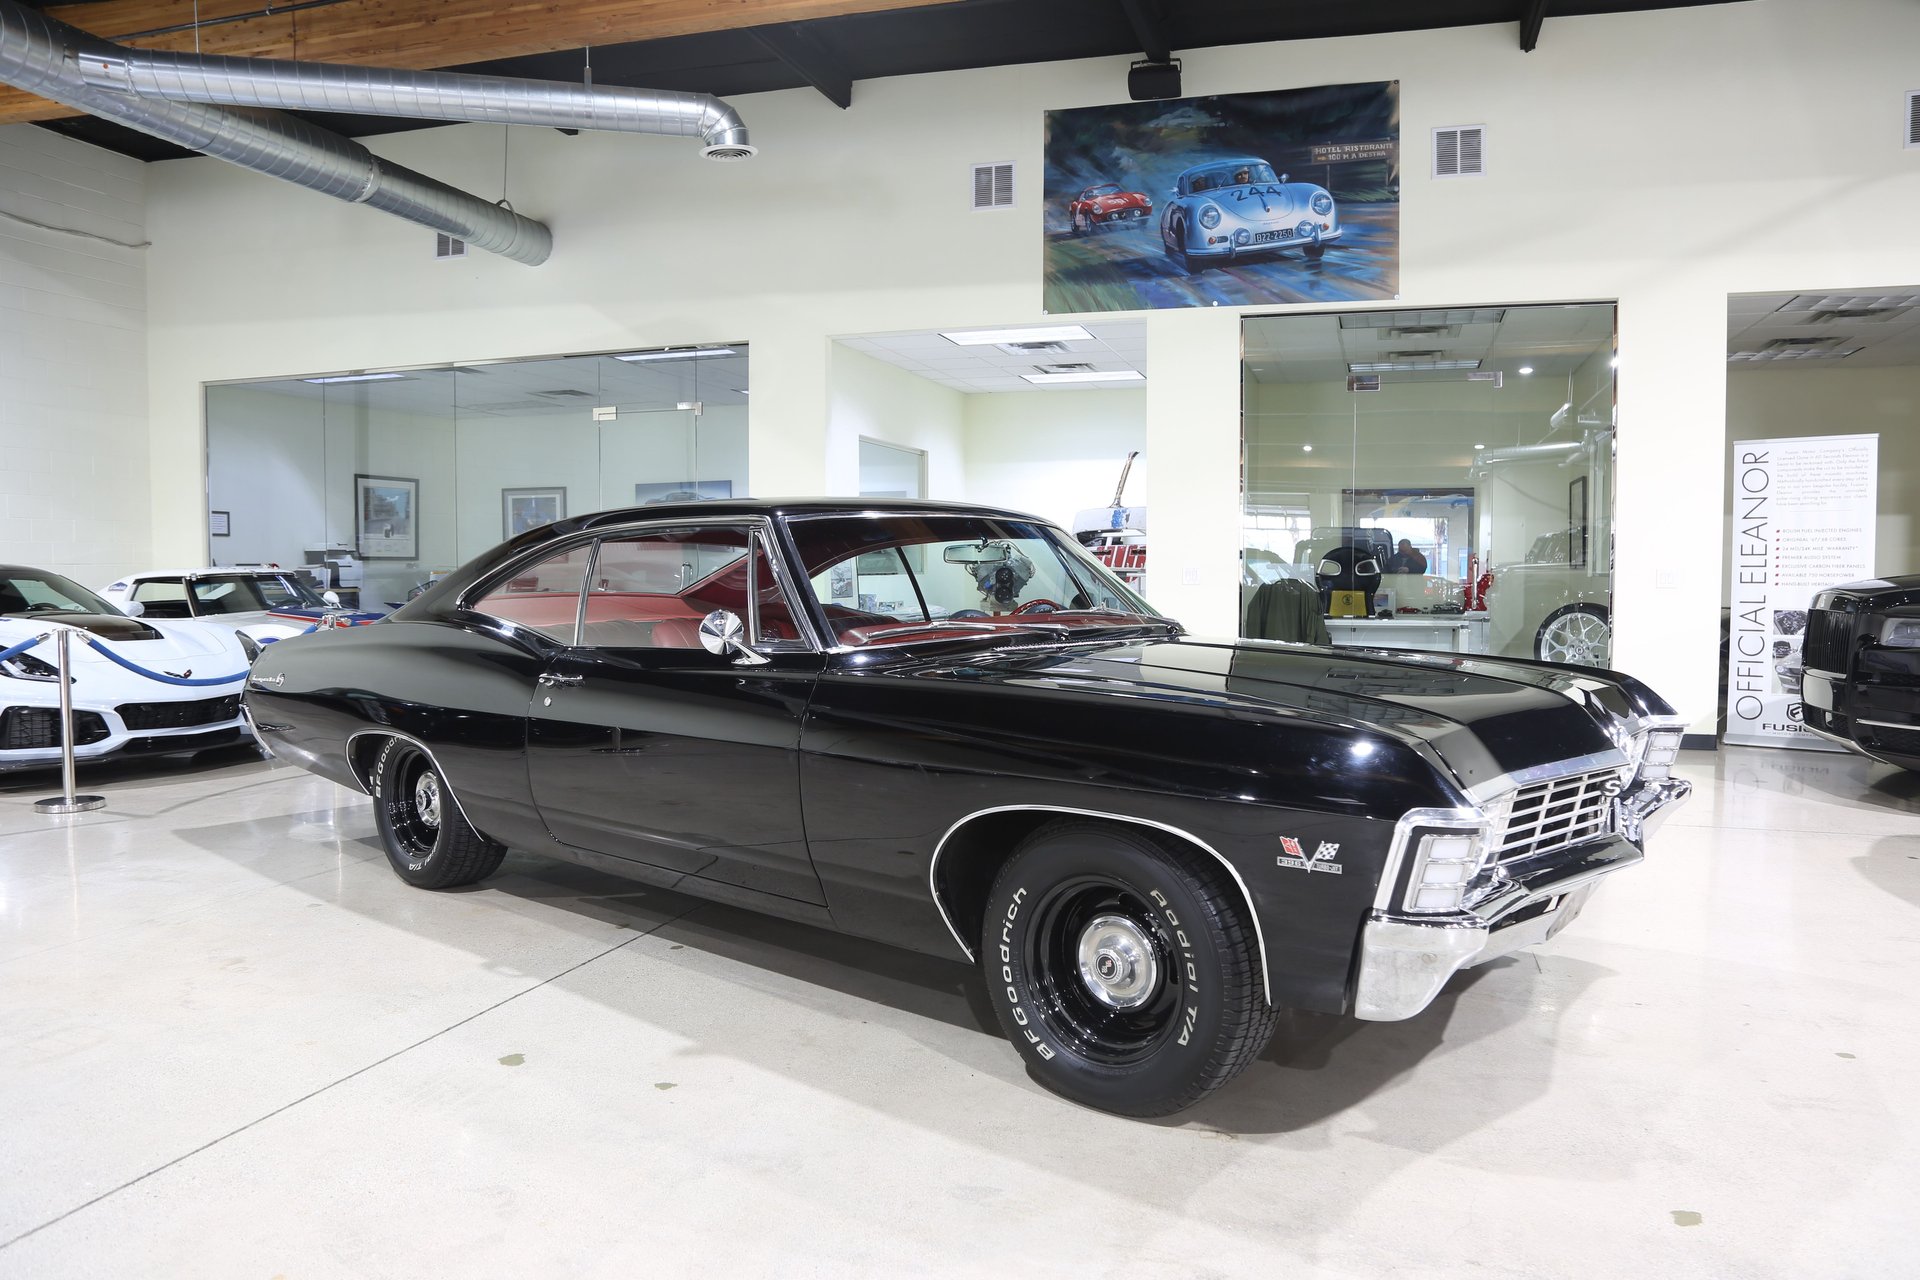 1967 Chevrolet Impala | Fusion Luxury Motors